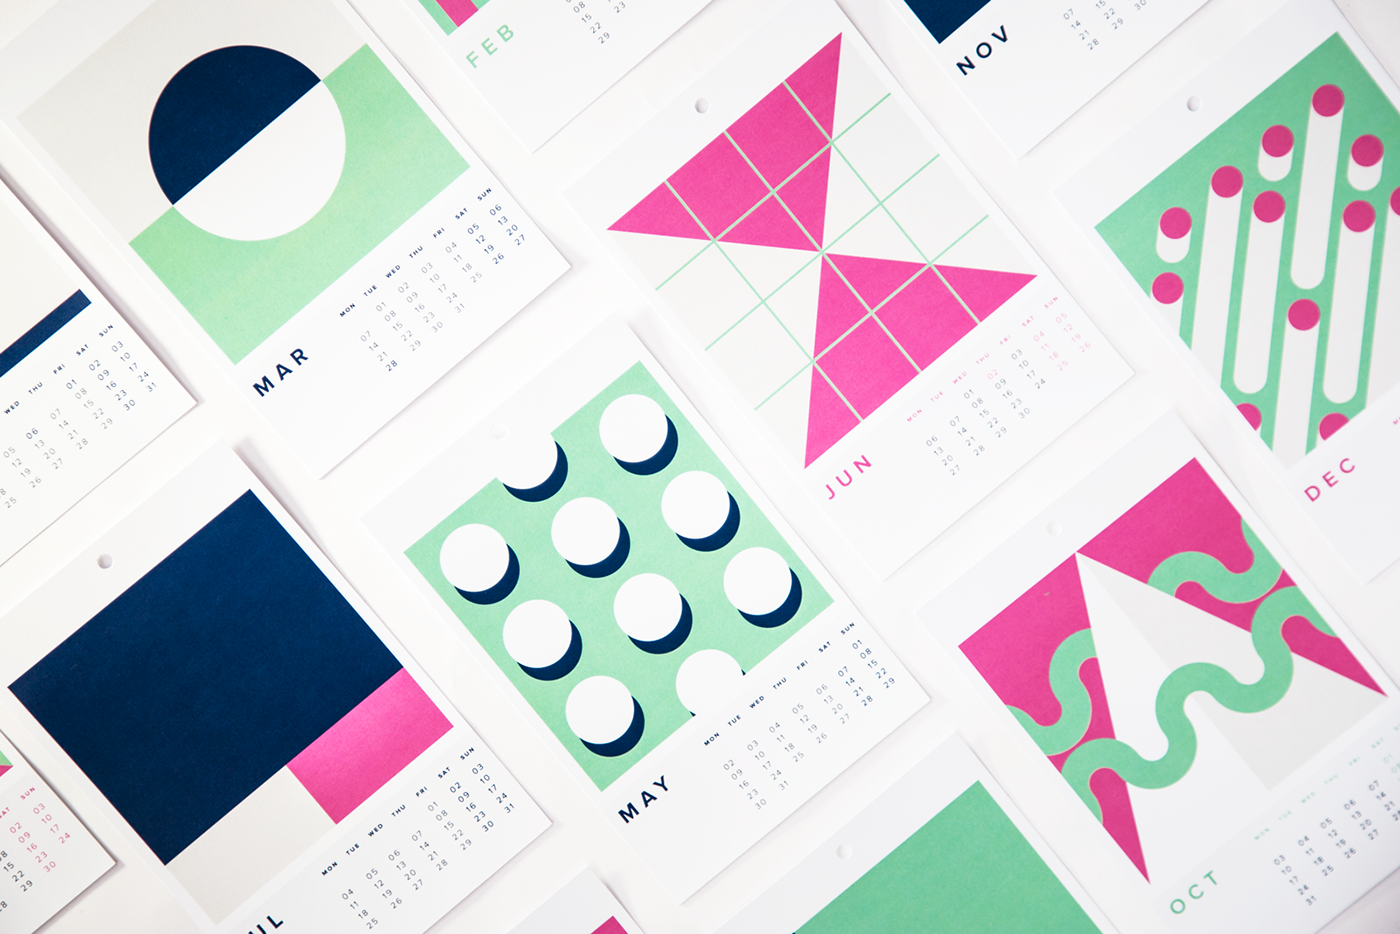 calendar deskcalendar geometry colors 2016 Calendar graphics artworks stationary paper desk print free wallpaper iphone case iphone